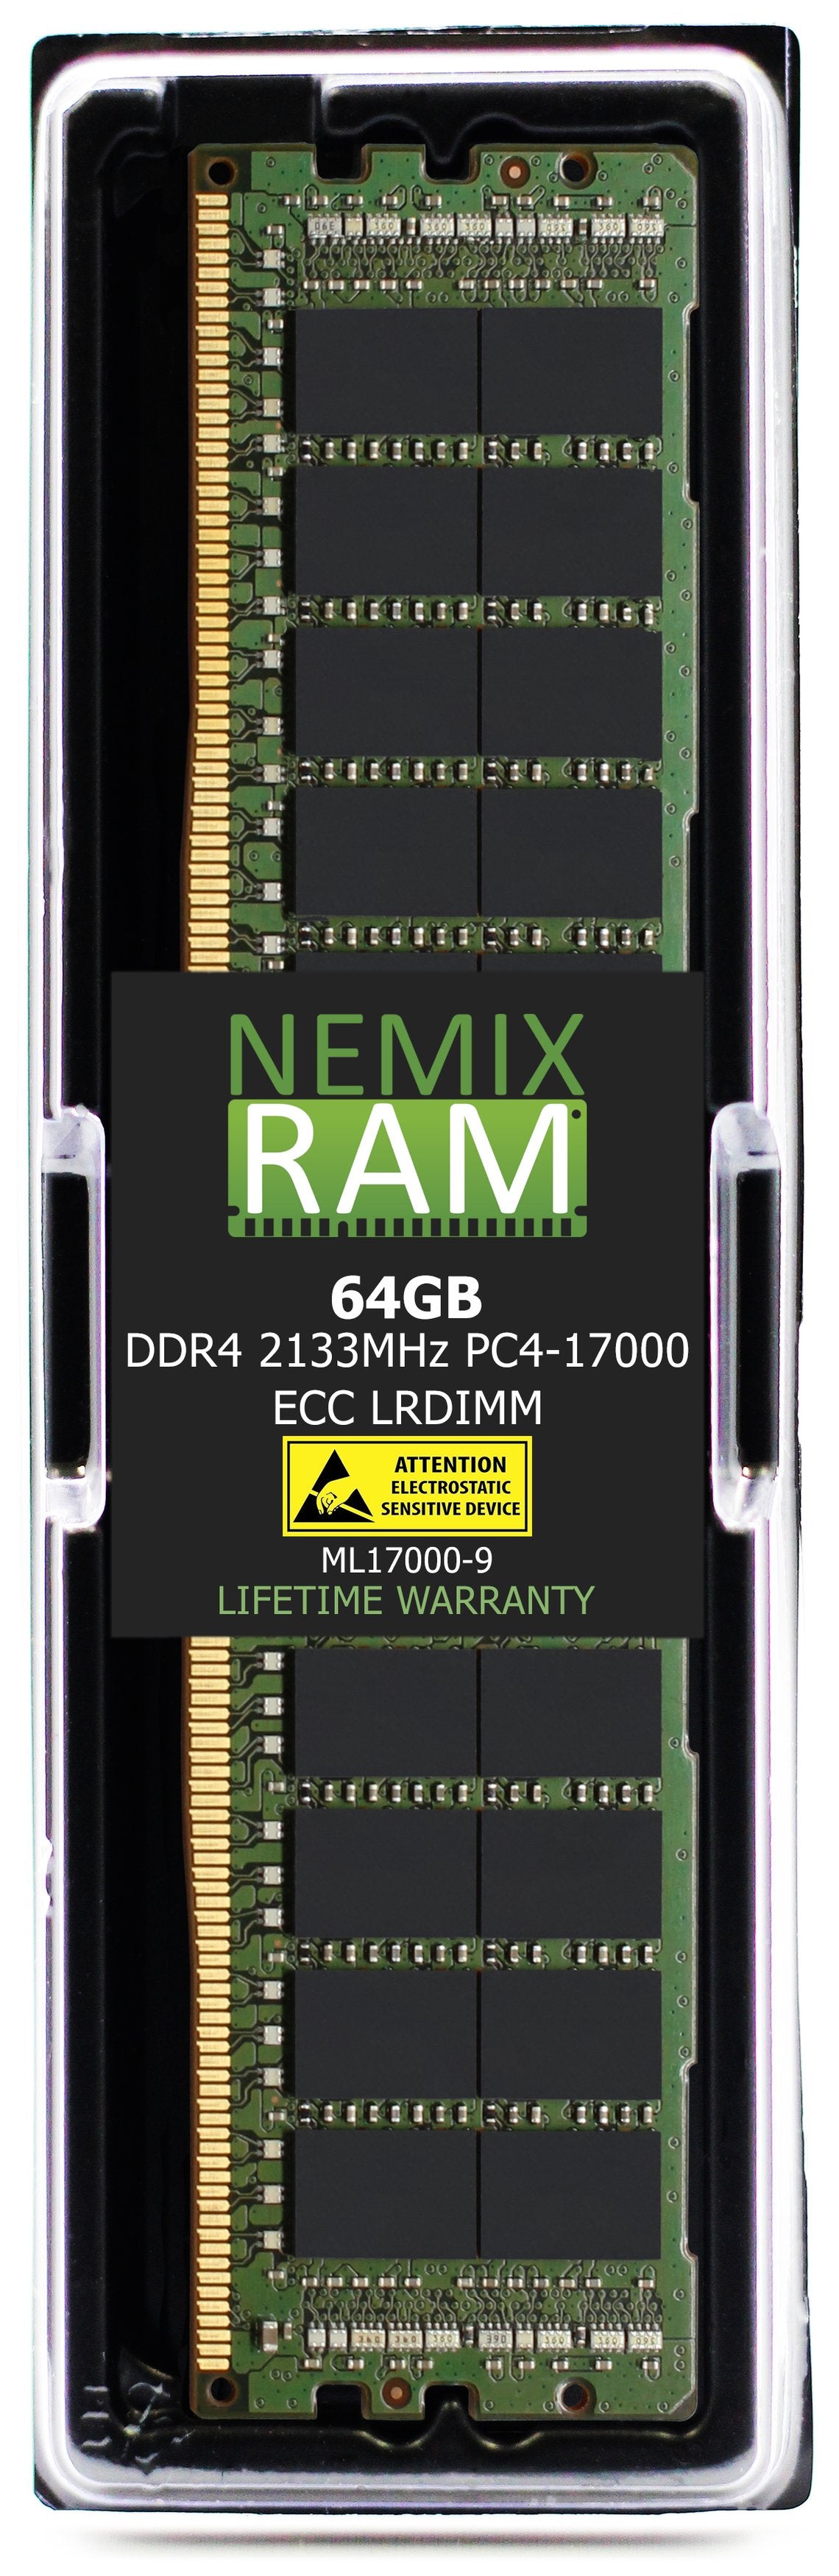 Hynix HMAA8GL7MMR4N-TF 64GB DDR4 2133MHZ PC4-17000 LRDIMM Compatible Memory Module